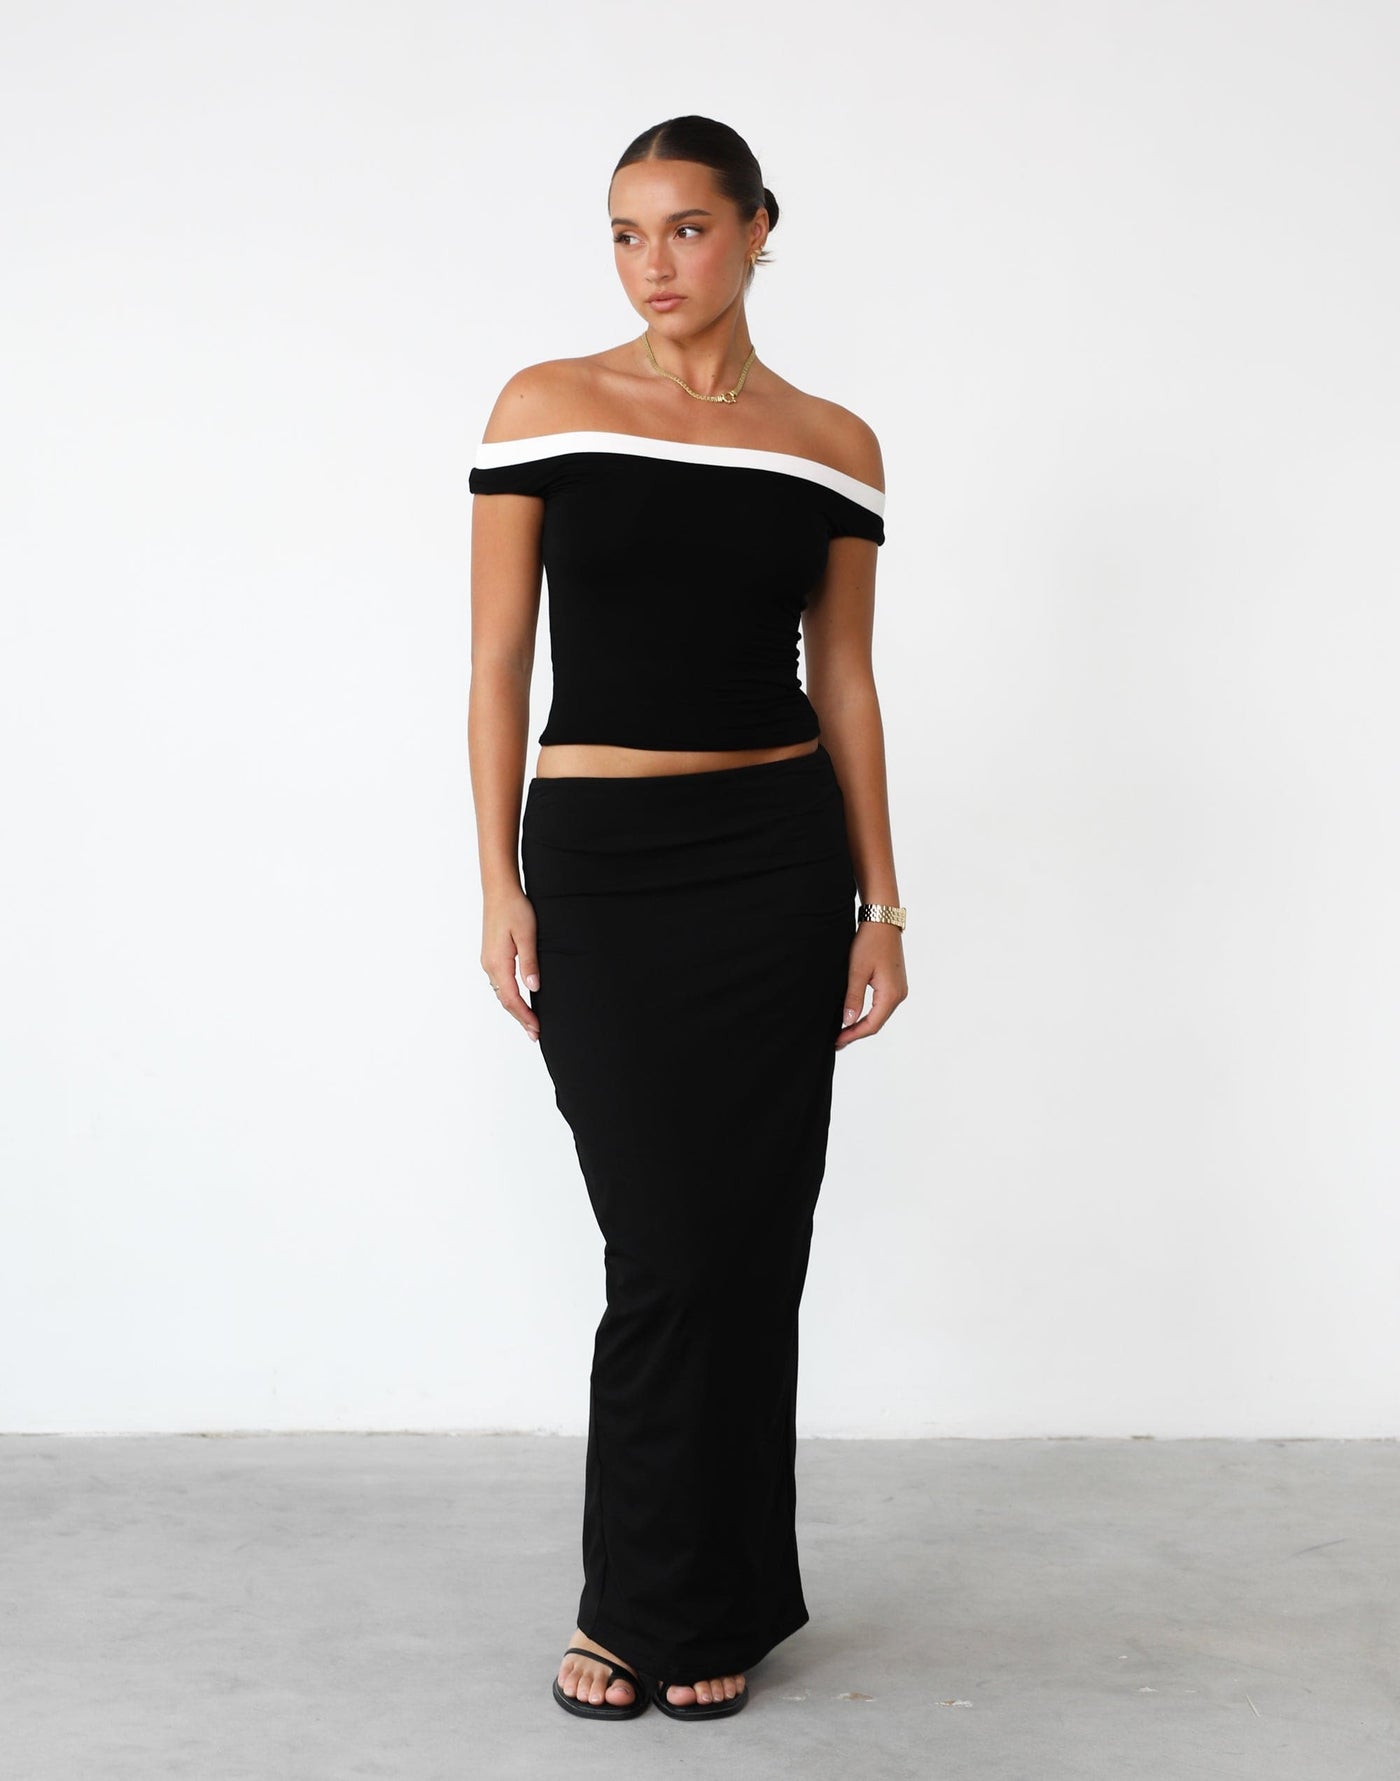 Ari Top (Black) - Contrast Detail Off Shoulder Top - Women's Top - Charcoal Clothing